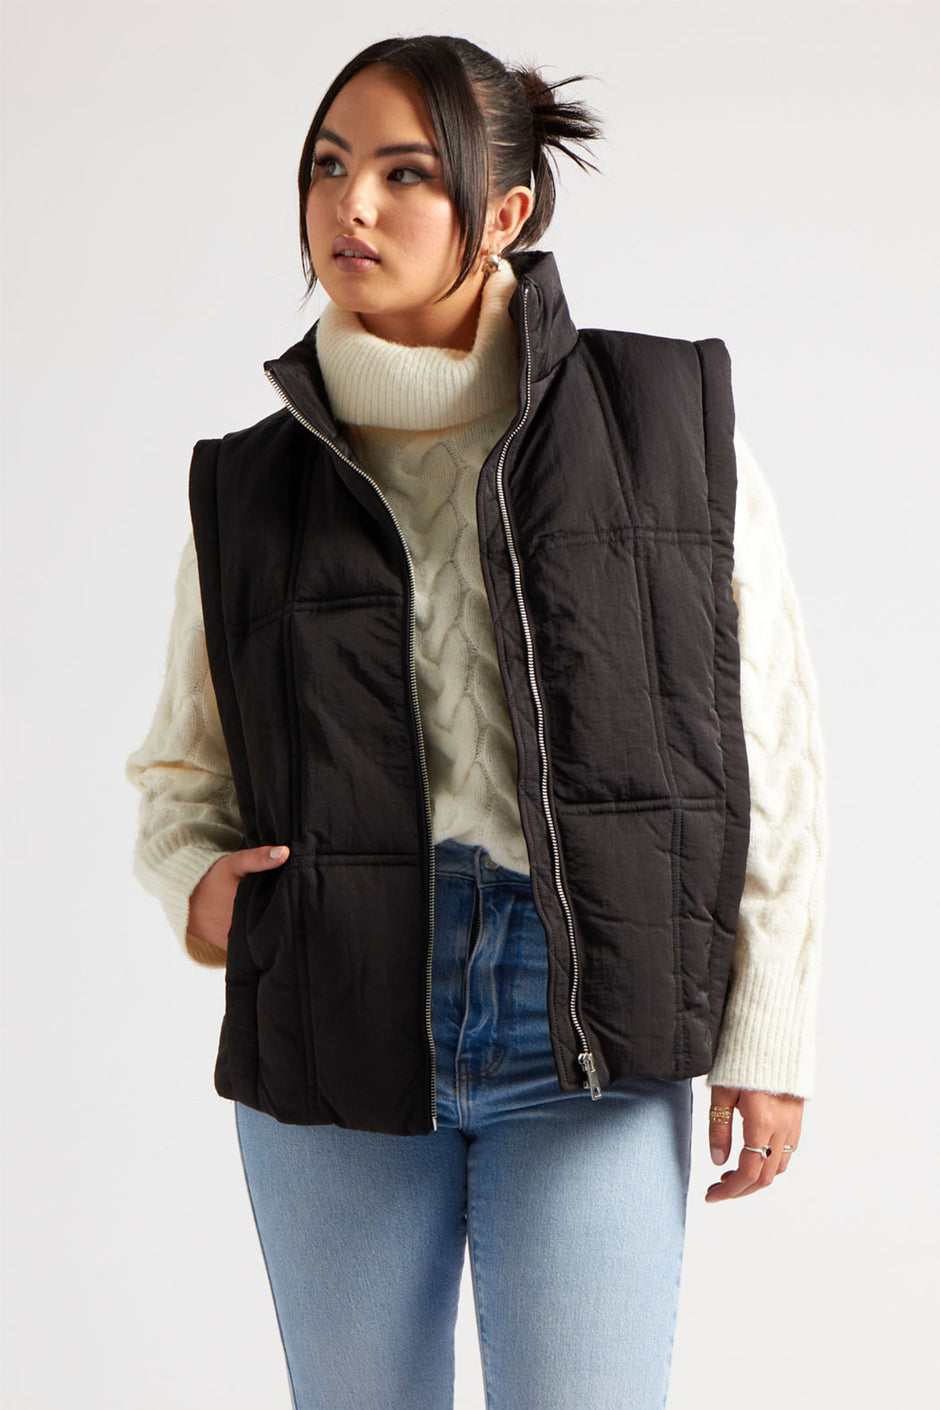 Coats & Jackets | Urban Bliss clothing